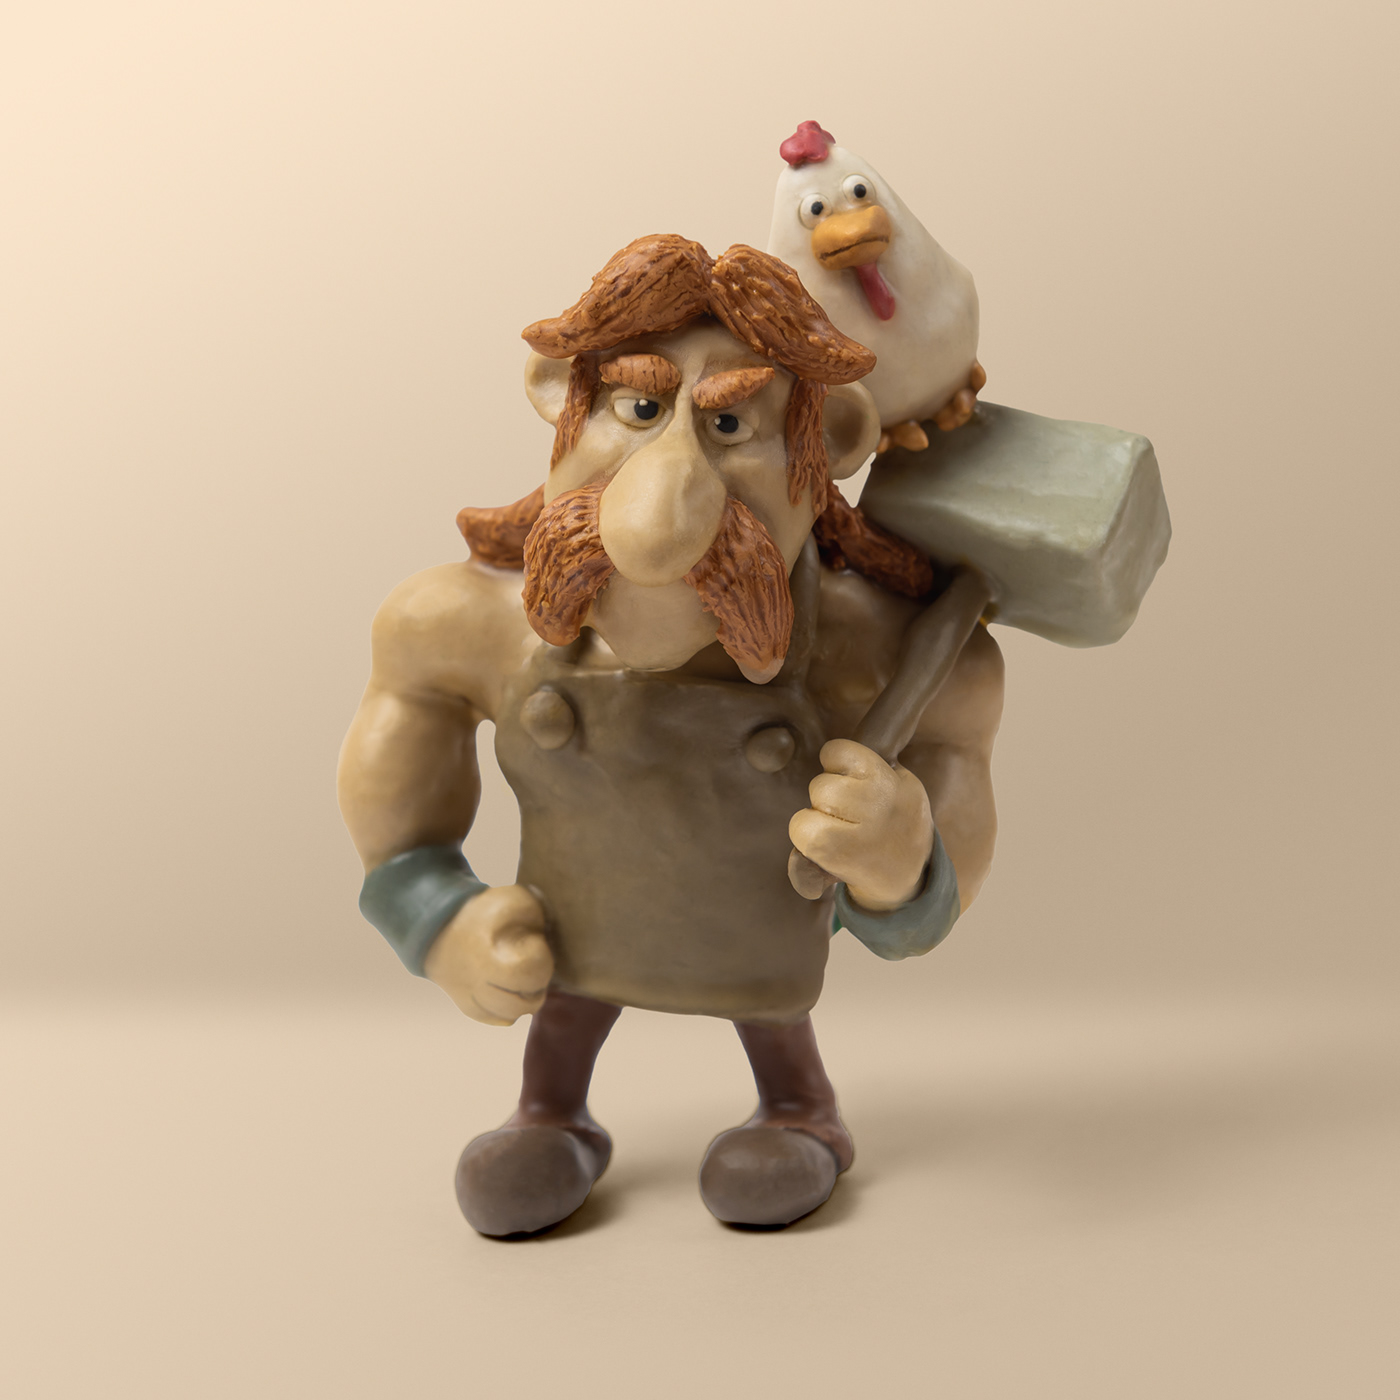 пластилин Plasticine sculpture clay 3D handmade Asterix Character cartoon asterix and obelix